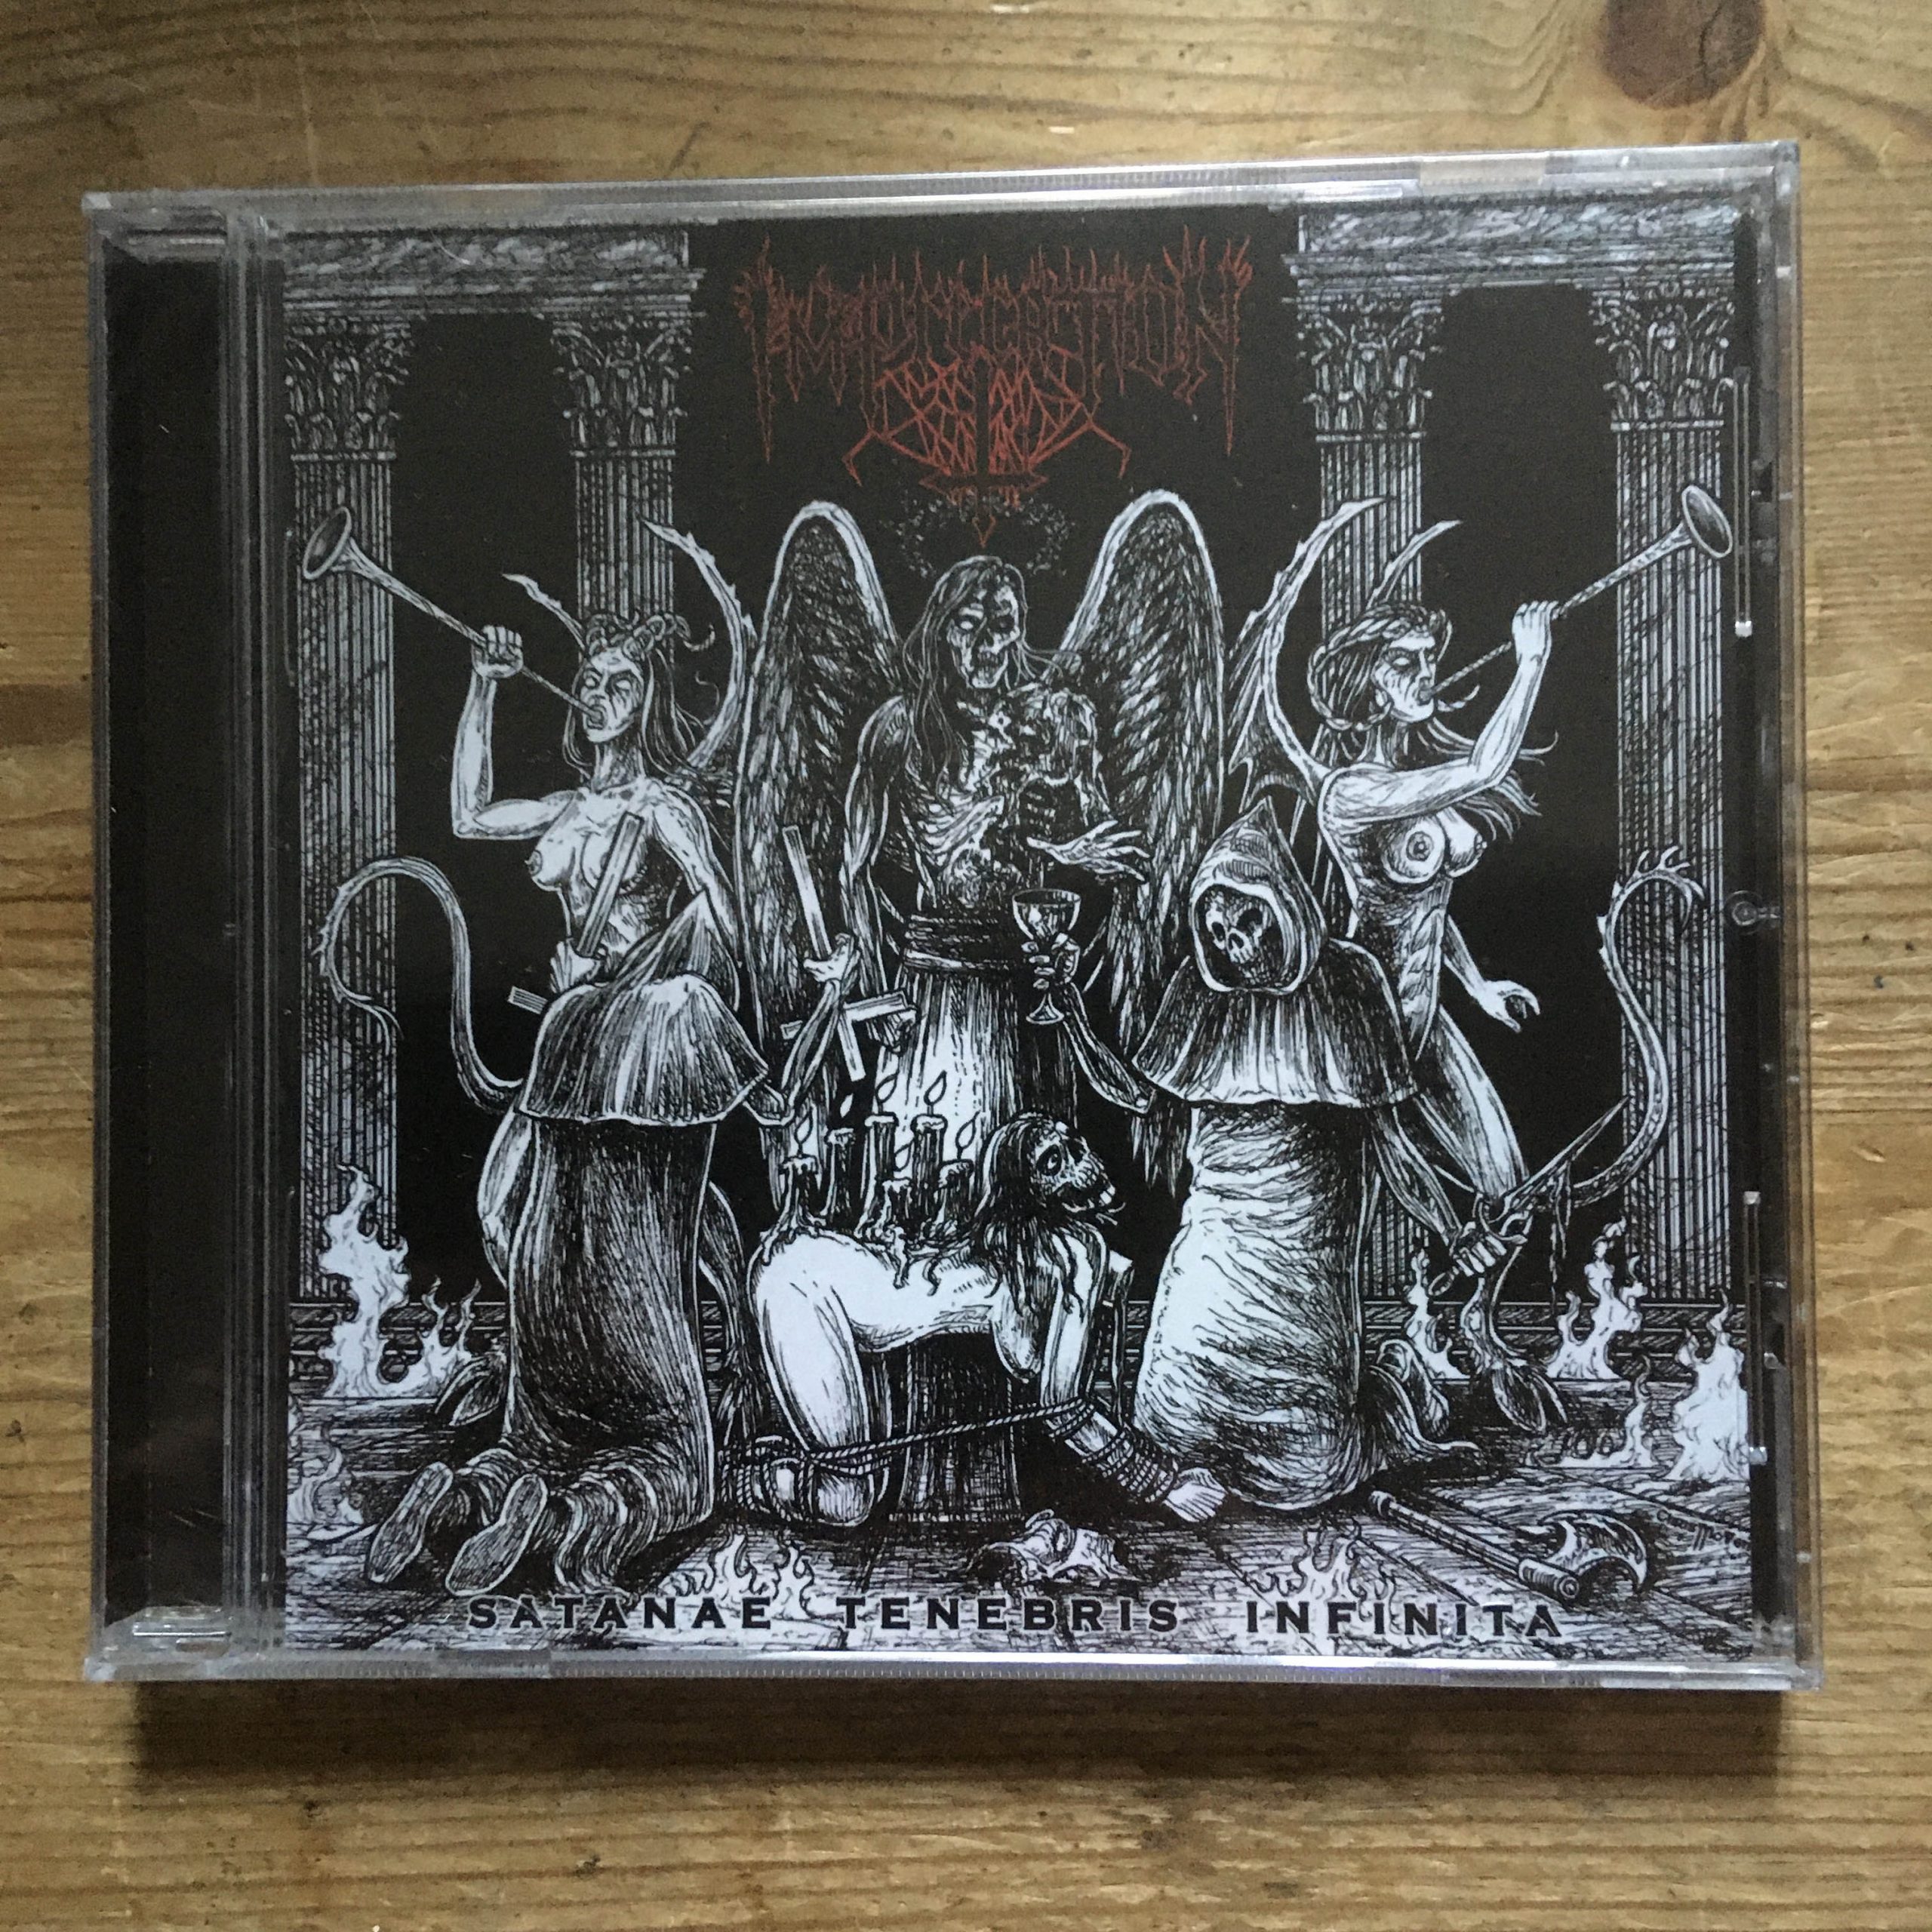 Photo of the Imprecation - "Satanae Tenebris Infinita" CD